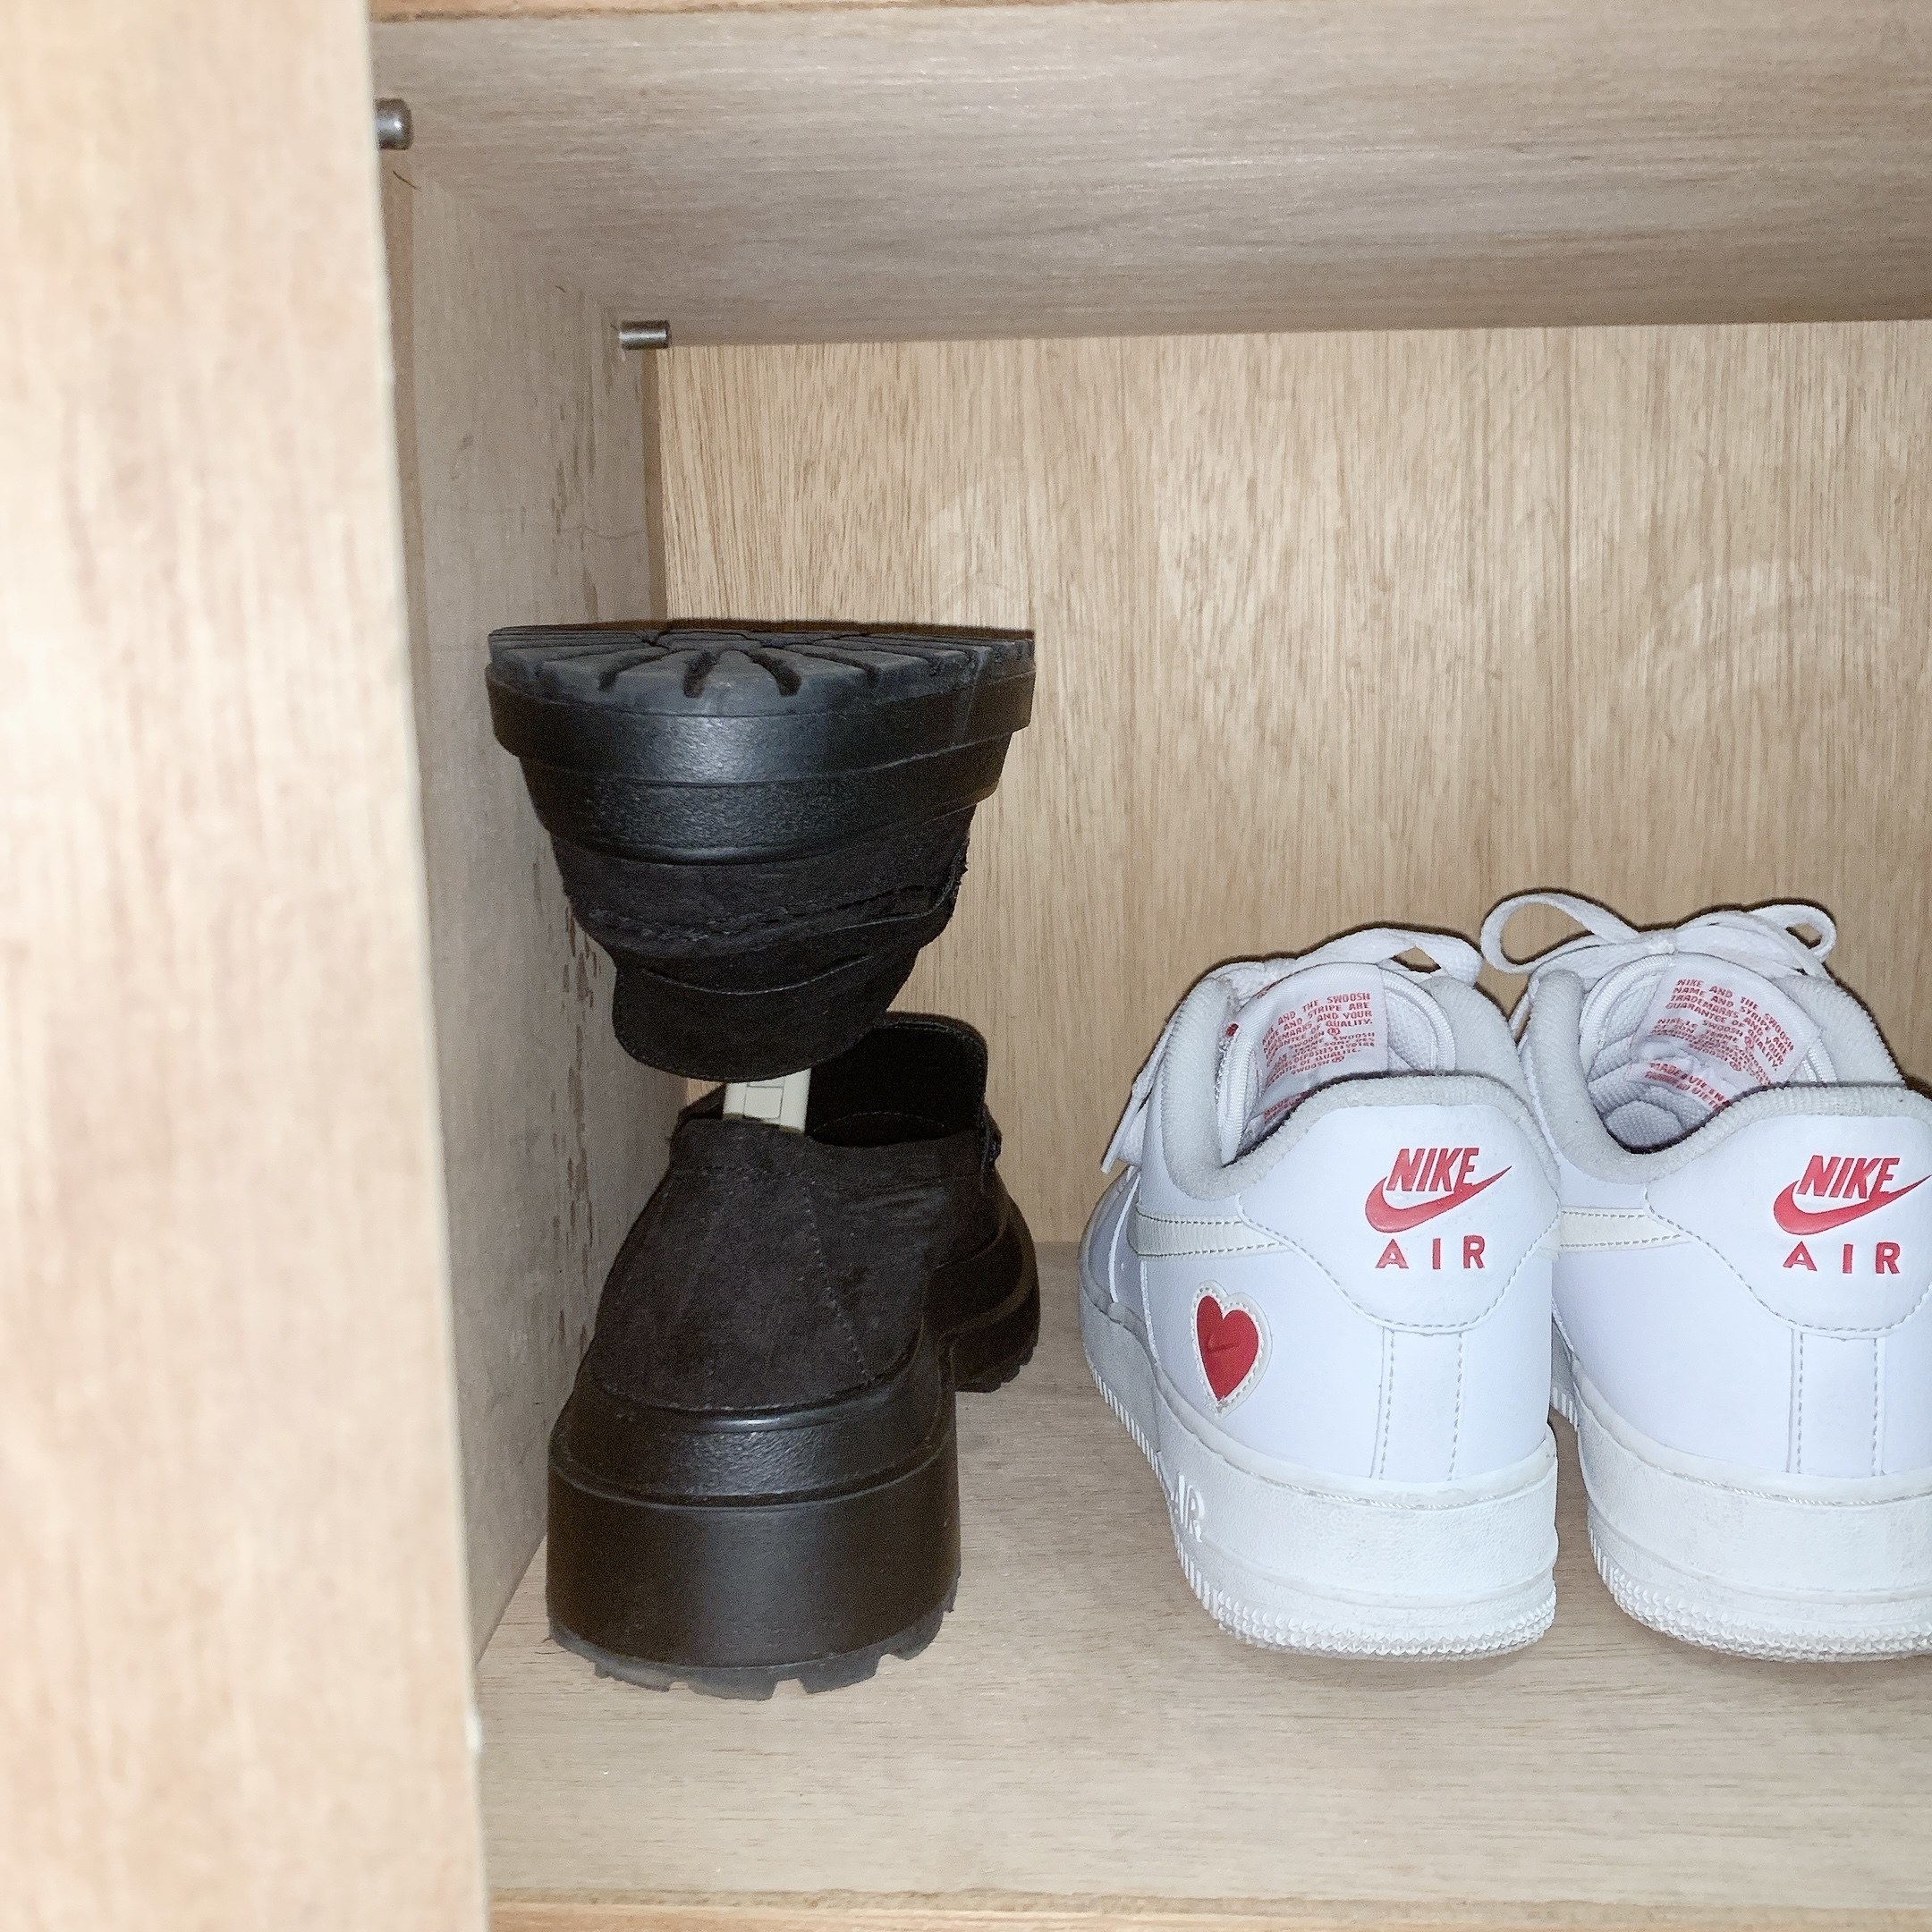 CanDo（キャンドゥ）のおすすめ便利アイテム「靴収納スタンド」